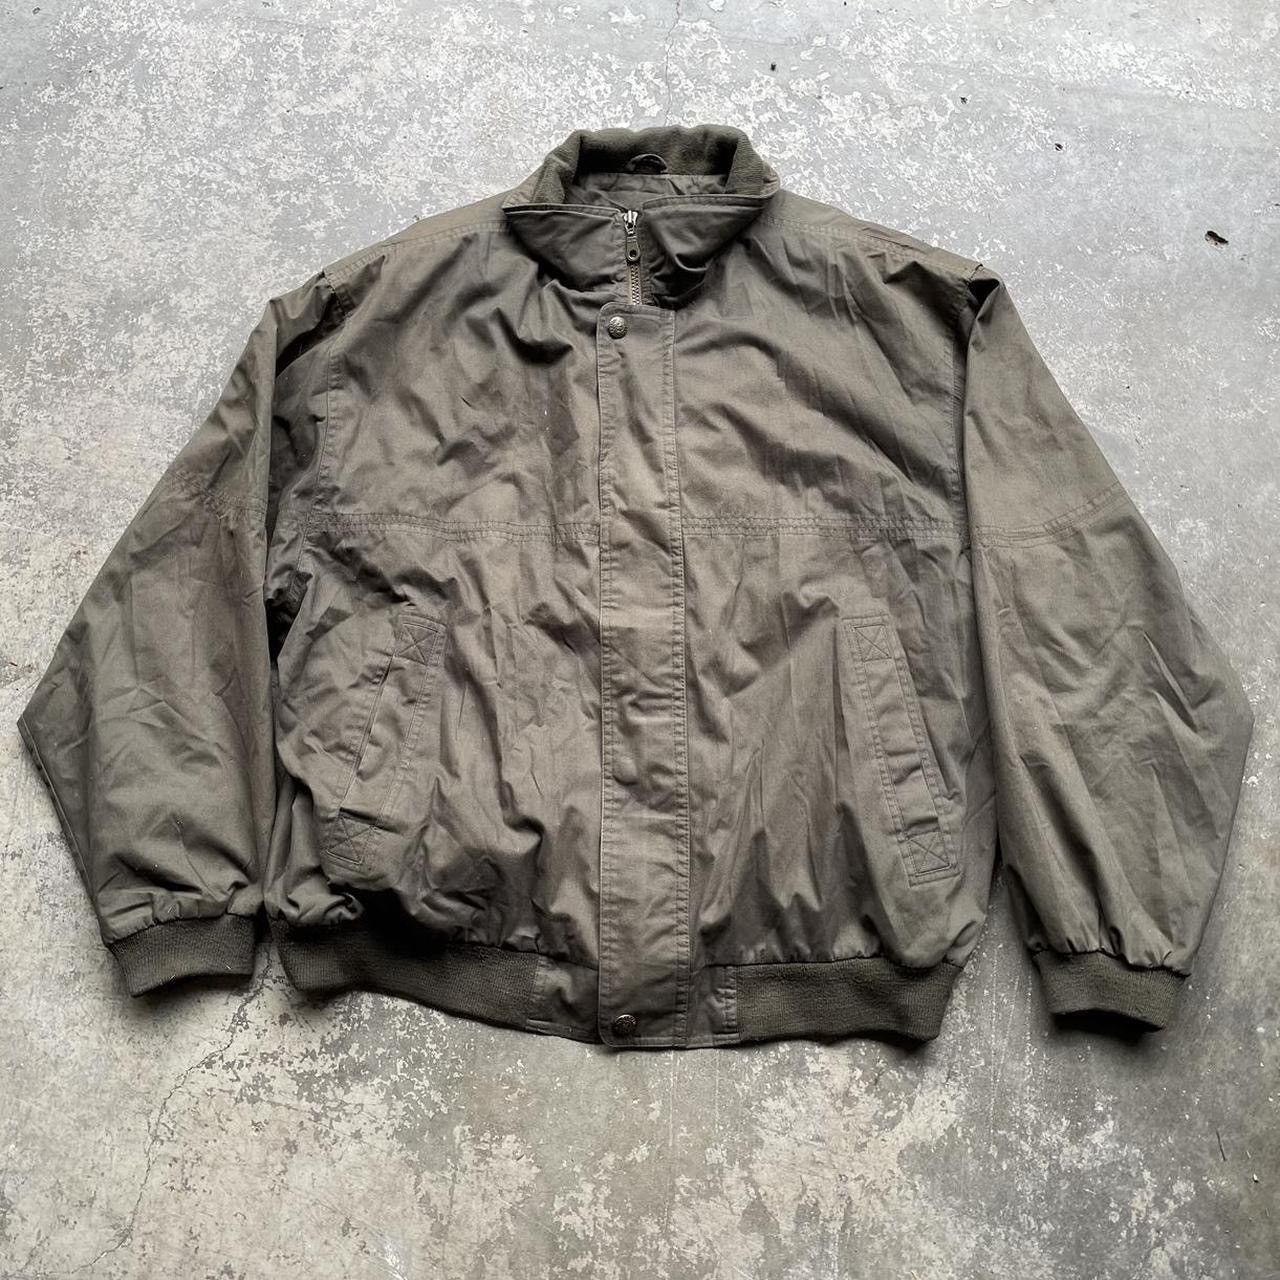 Pacific Trail gorpcore streetwear pacific trail bomber jacket size XL Size US XL / EU 56 / 4 - 1 Preview